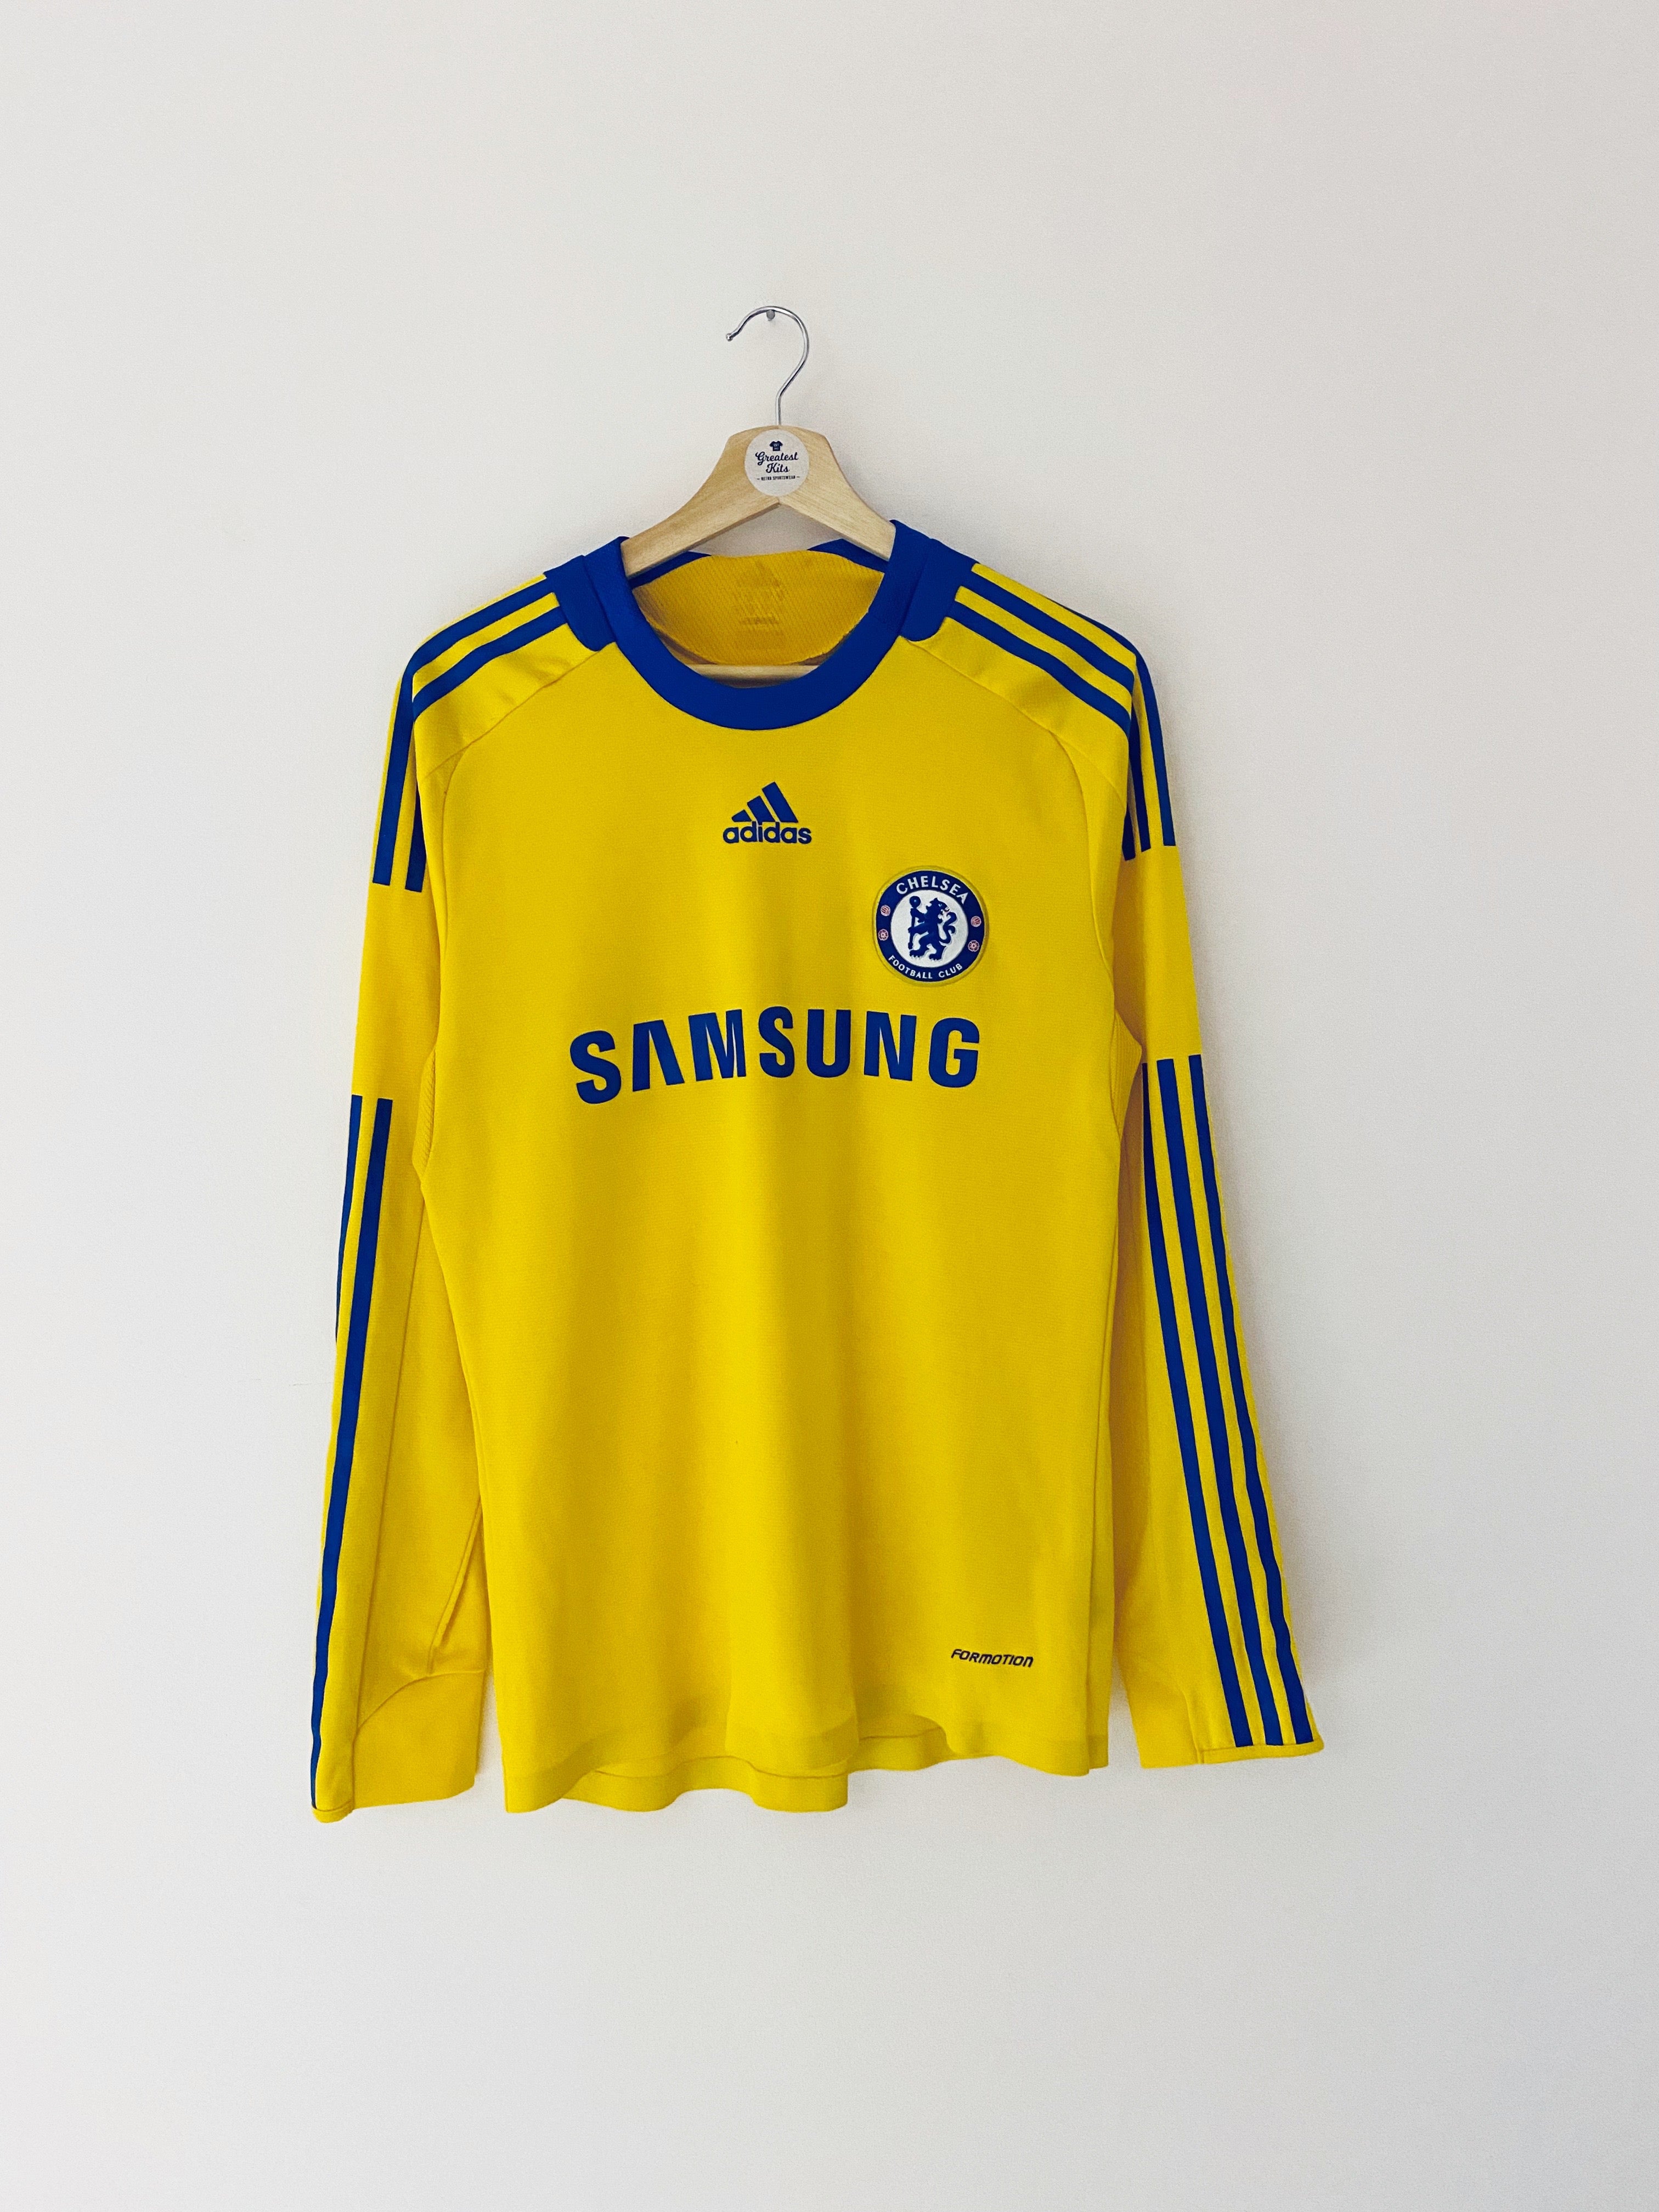 2008/09 Chelsea *Edición del jugador* Tercera camiseta L/S (M) 8.5/10